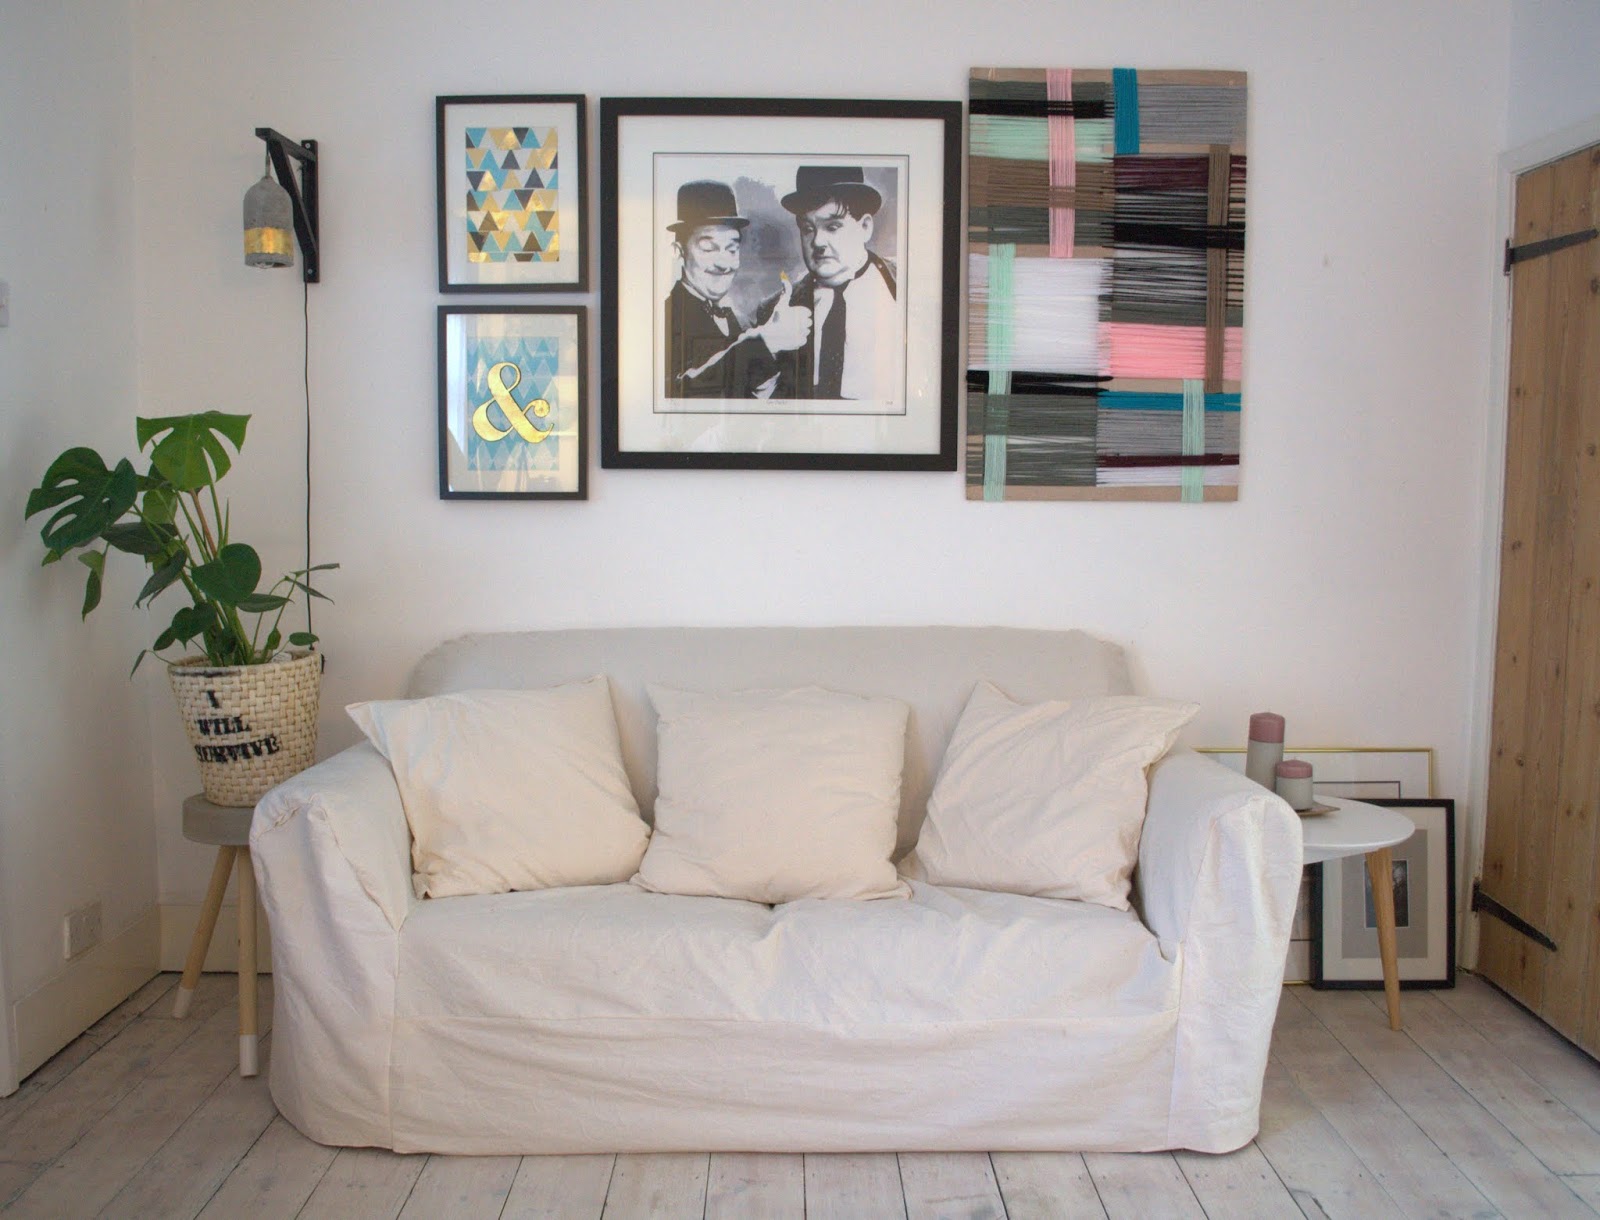 sofa slipcovers walmart in cotton white for sofa covering idea